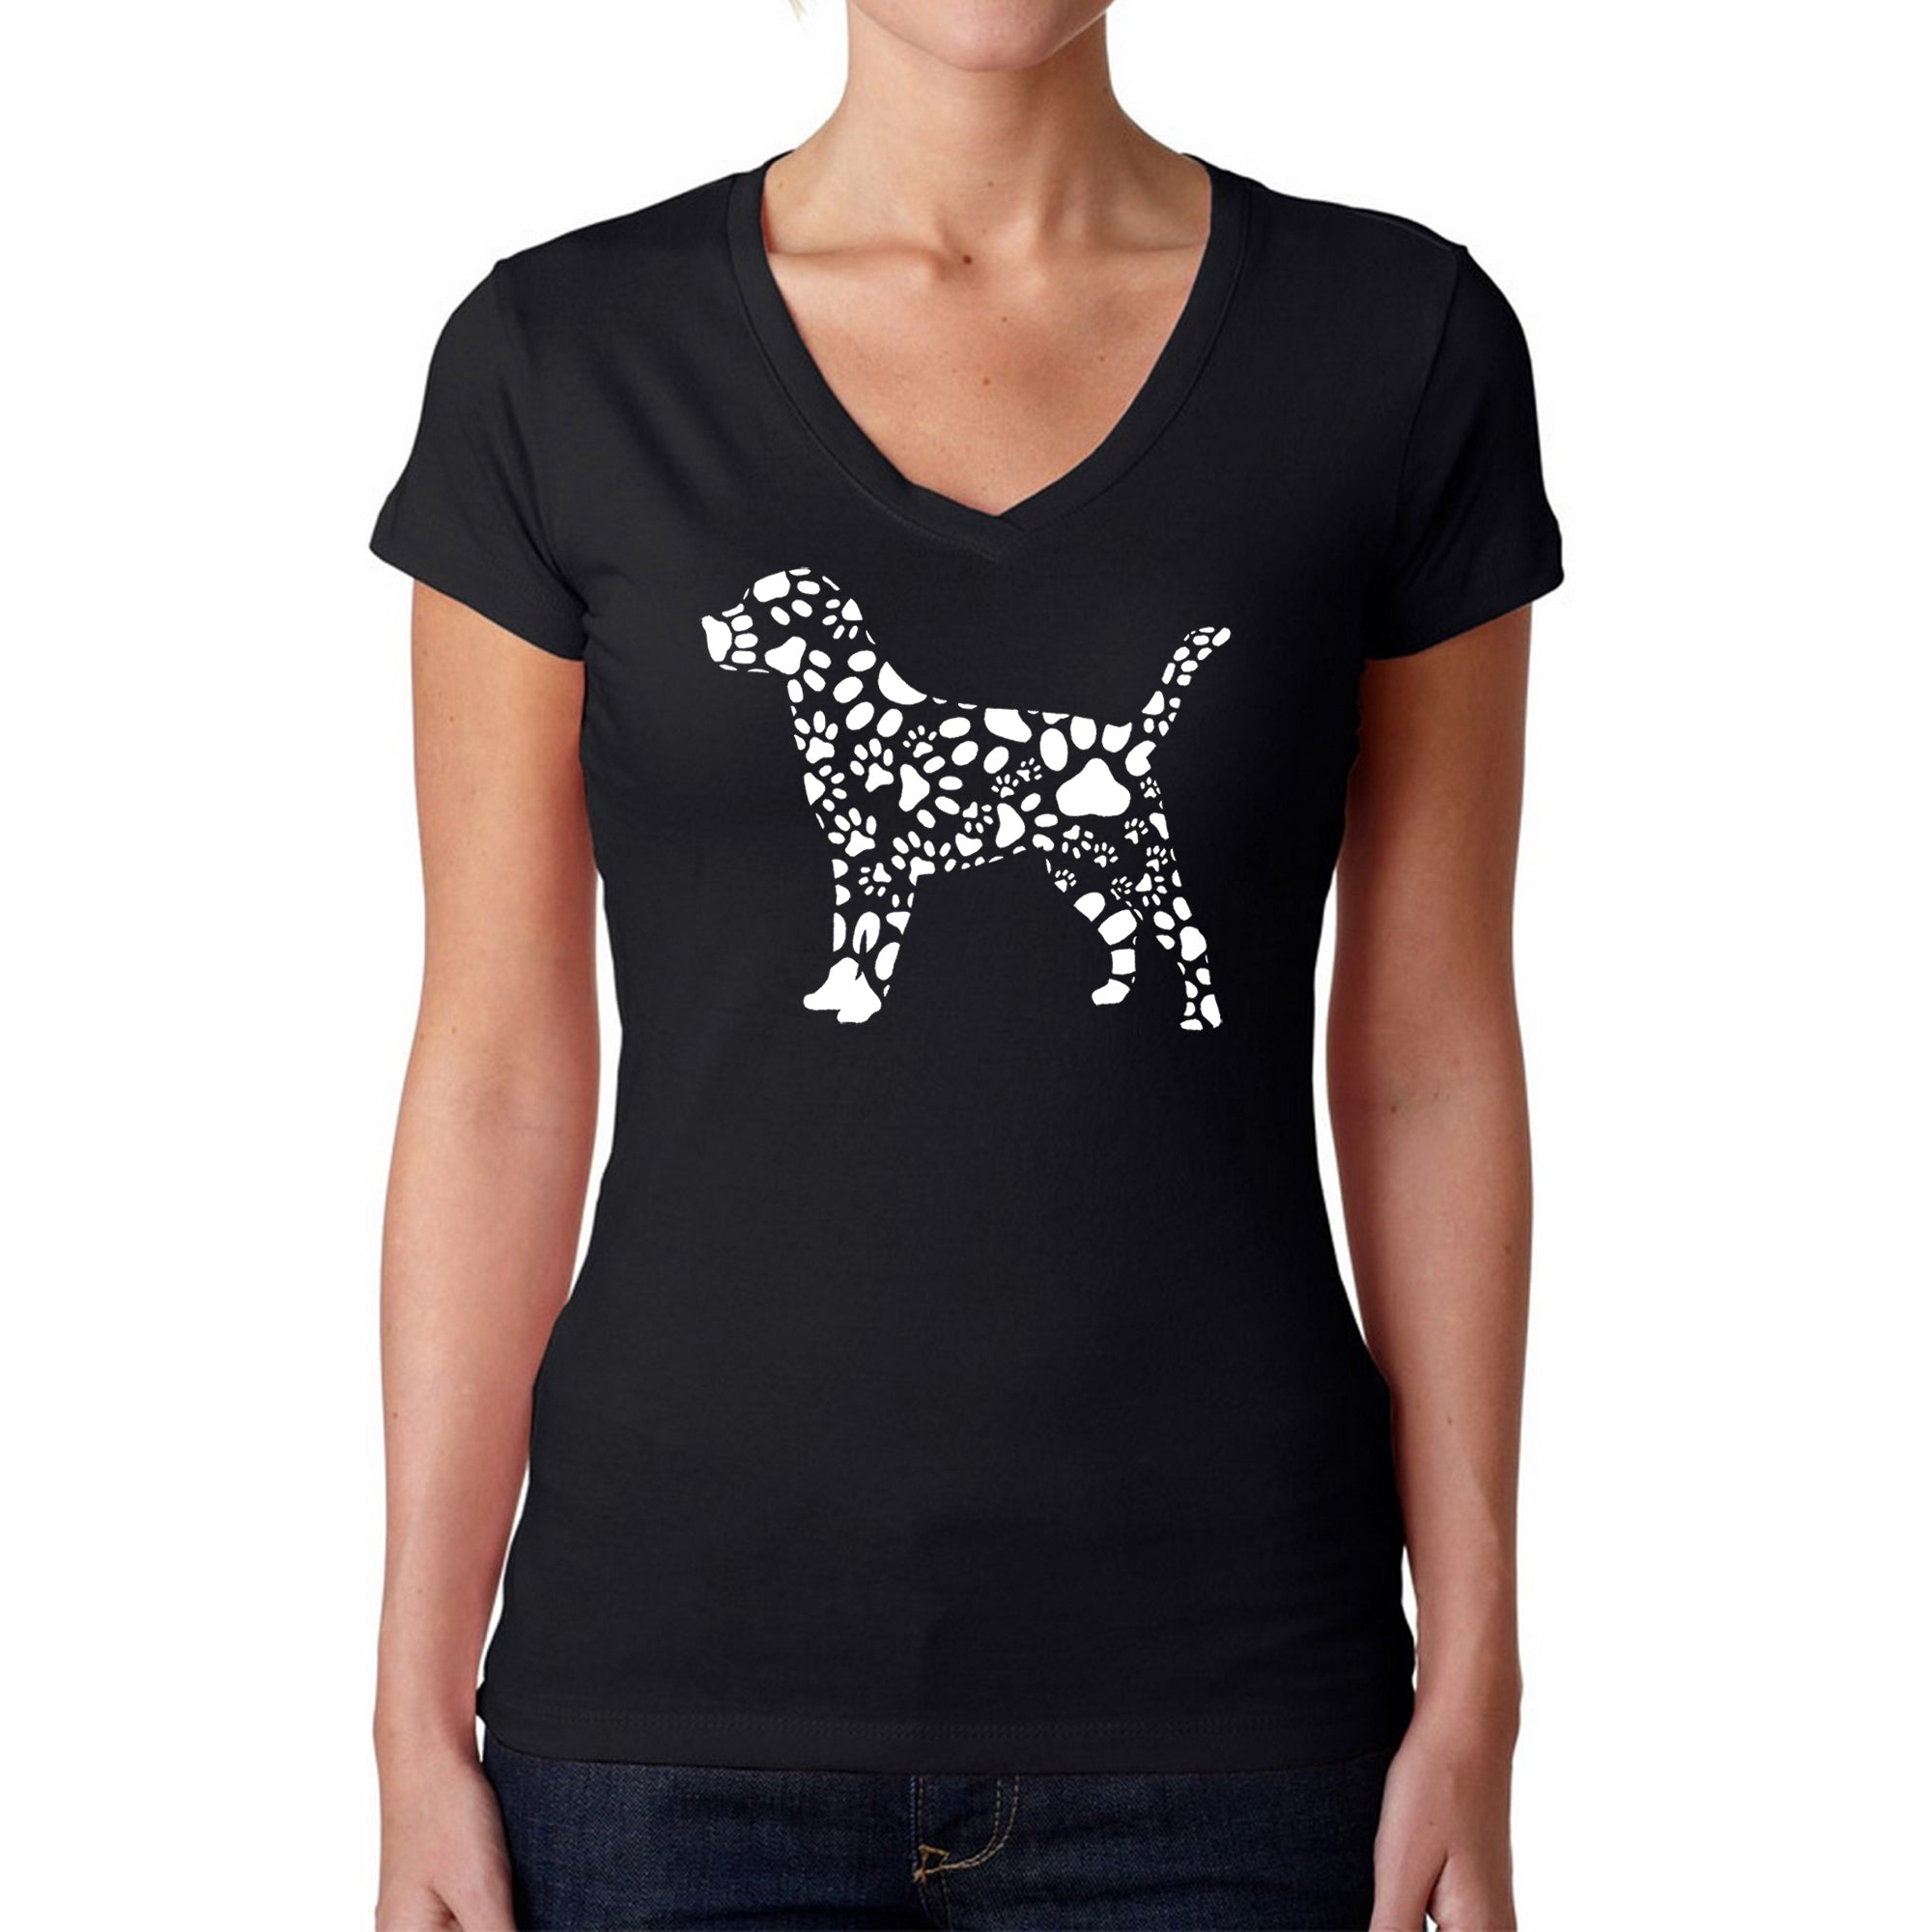 Dog Paw Prints - Women's Word Art V-Neck T-Shirt - Black - XS